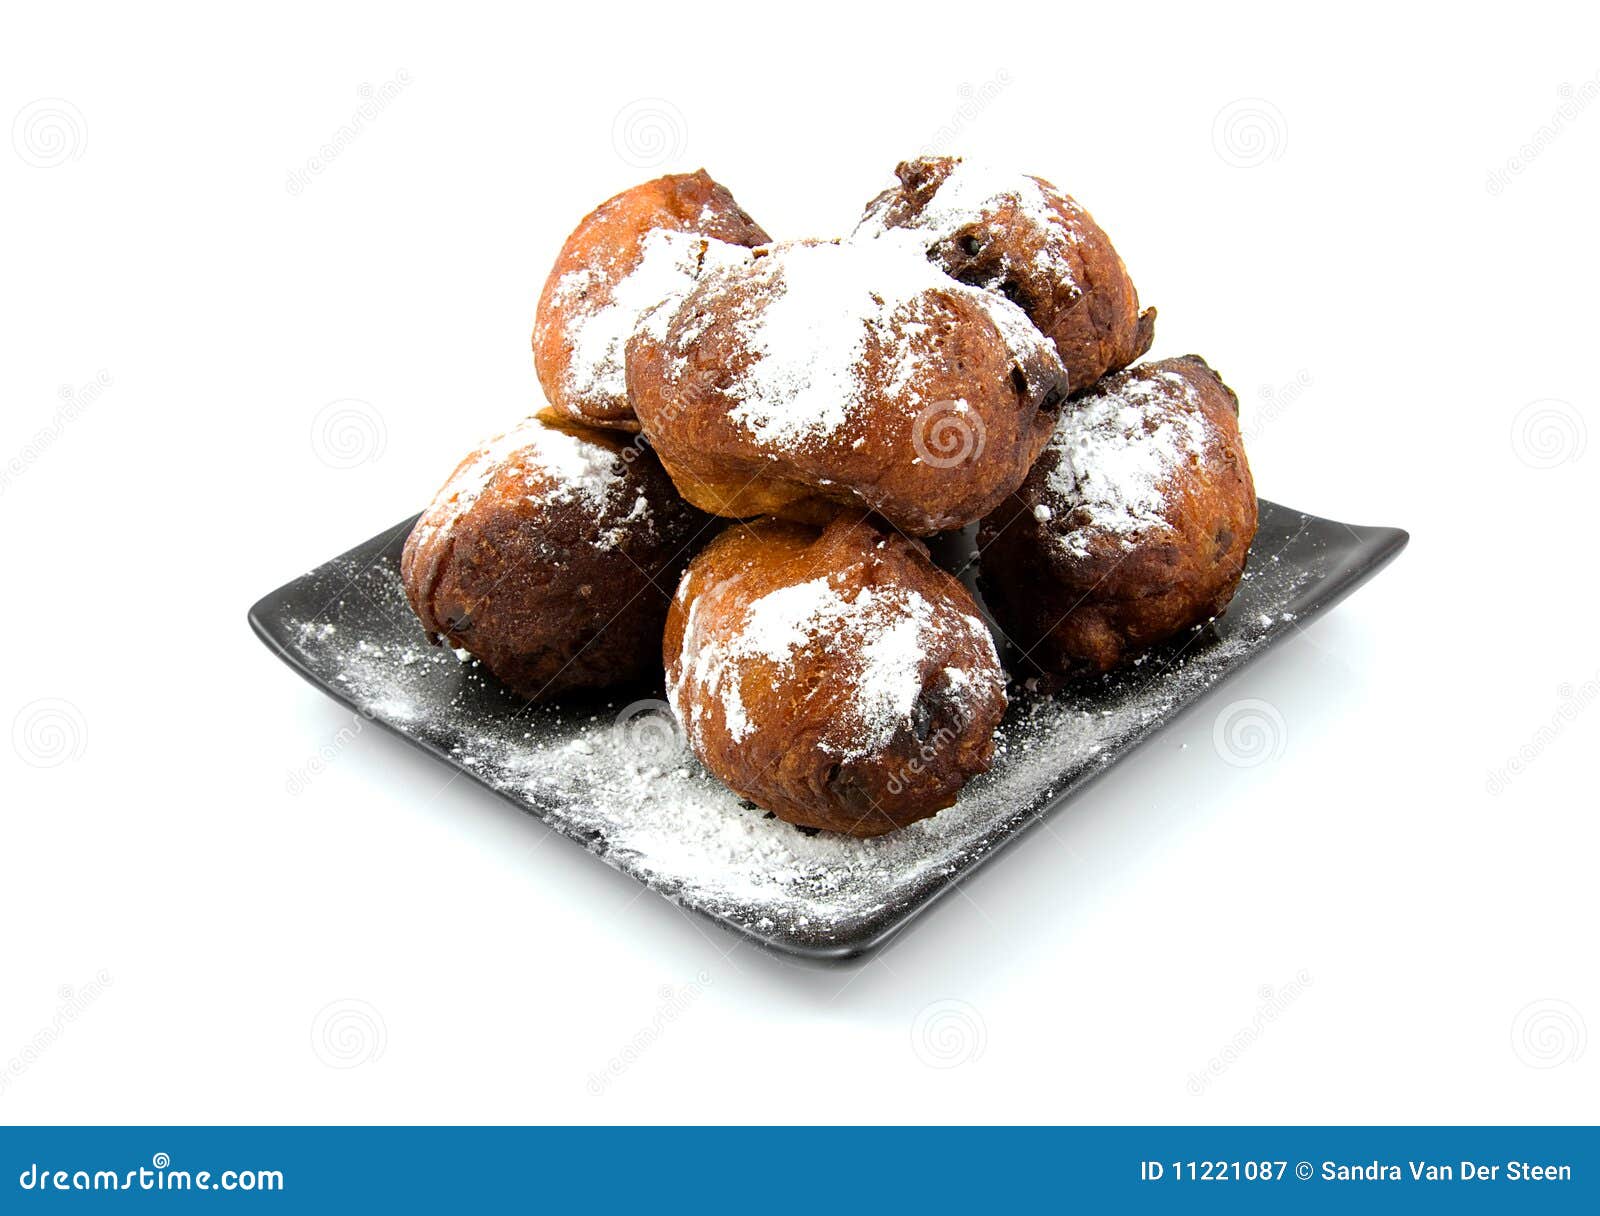 Dutch donut oliebollen stock image. Image of oliebollen - 11221087